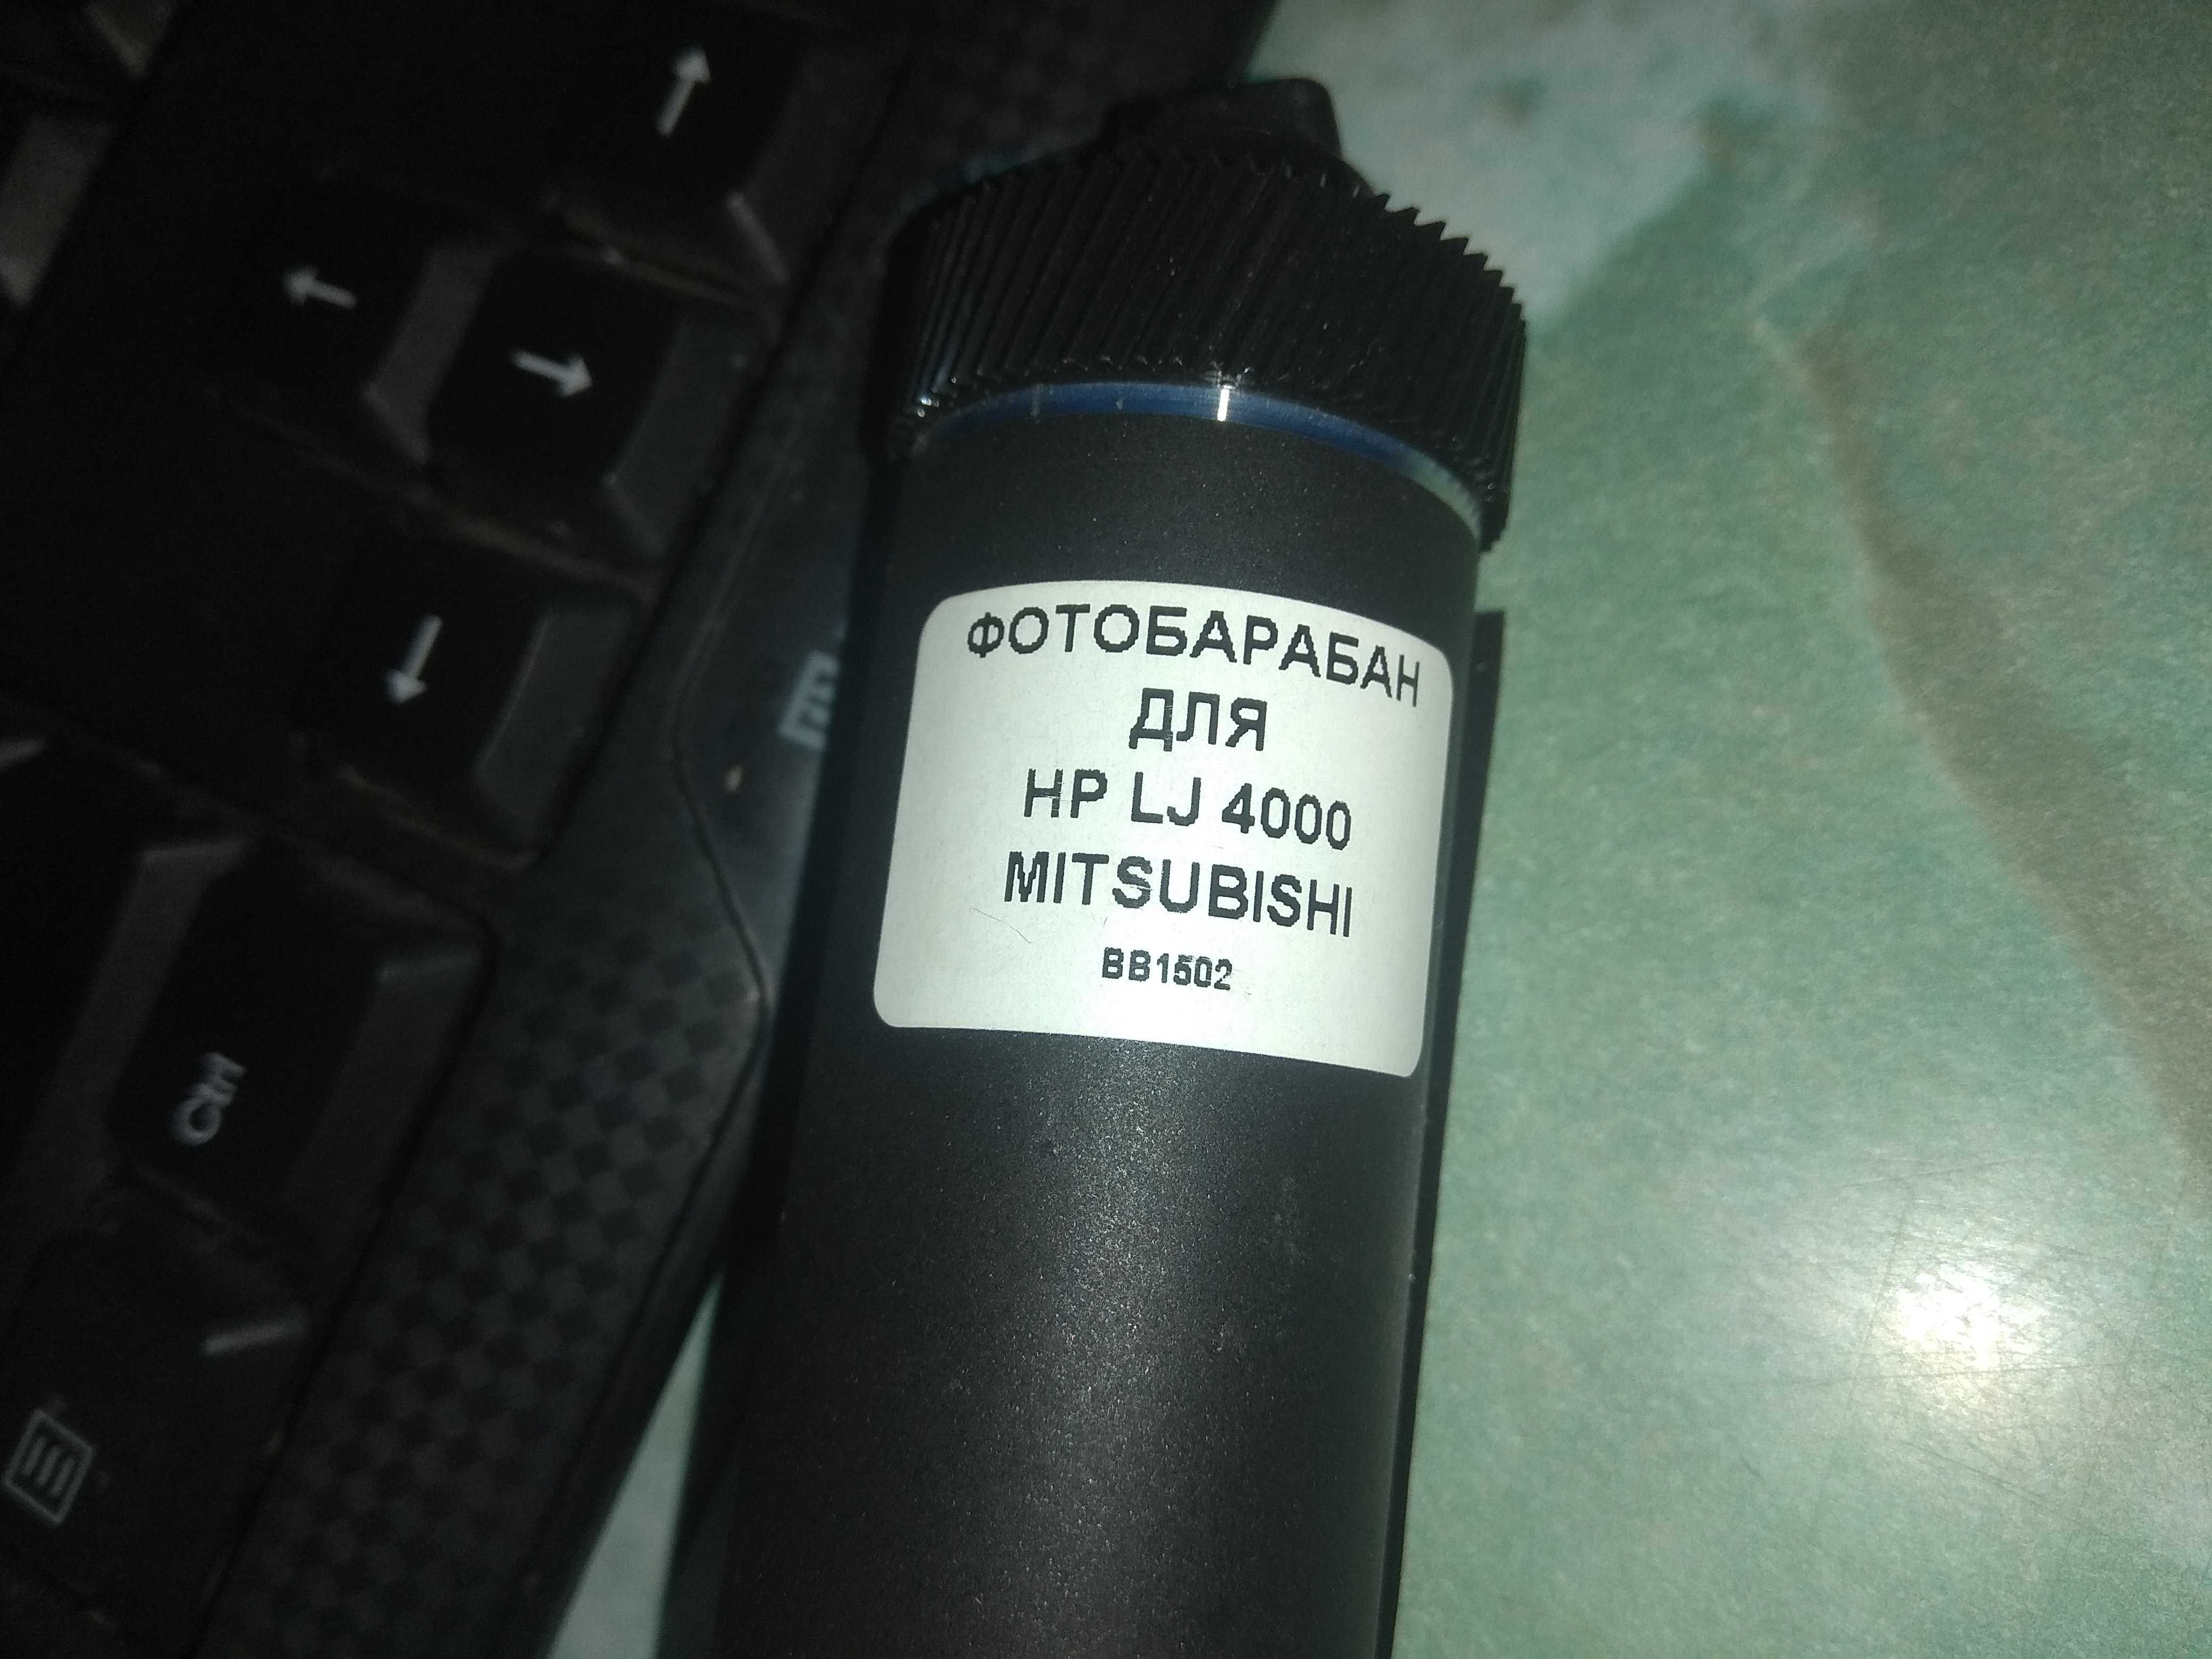 Новый фотобарабан HP LJ 4000, MITSUBISHI